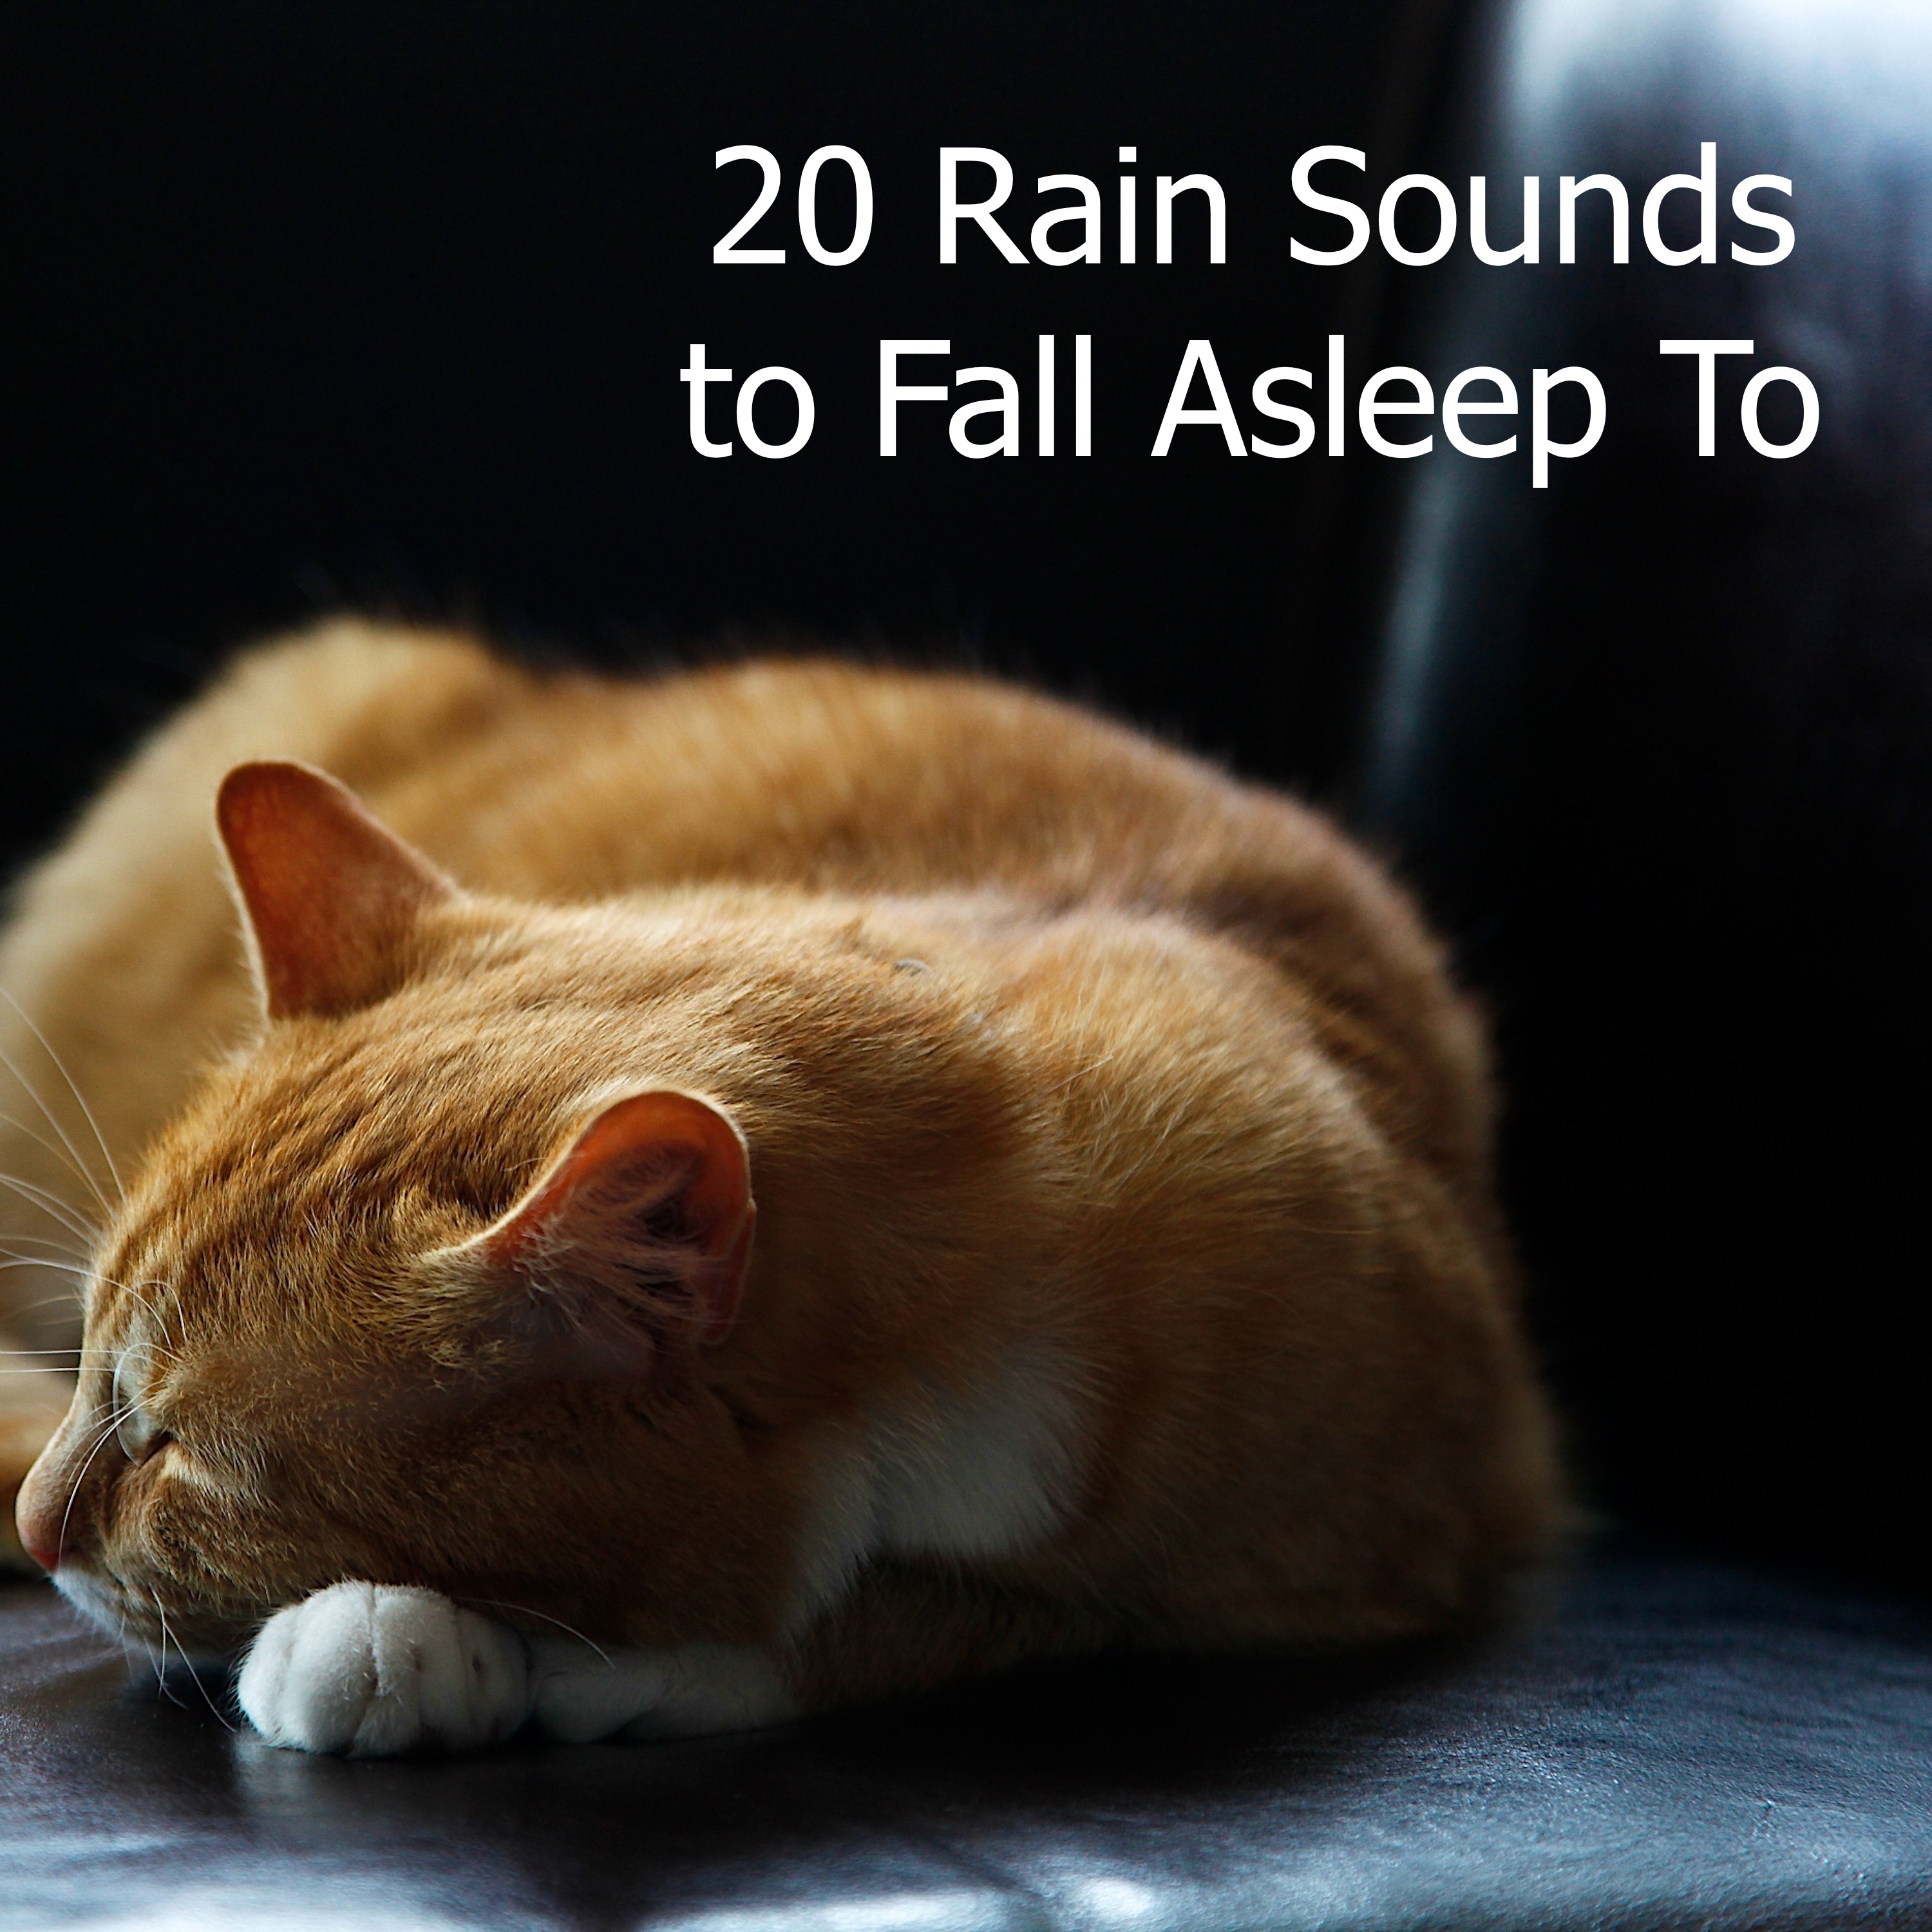 19 Rain Sounds to Fall Asleep To